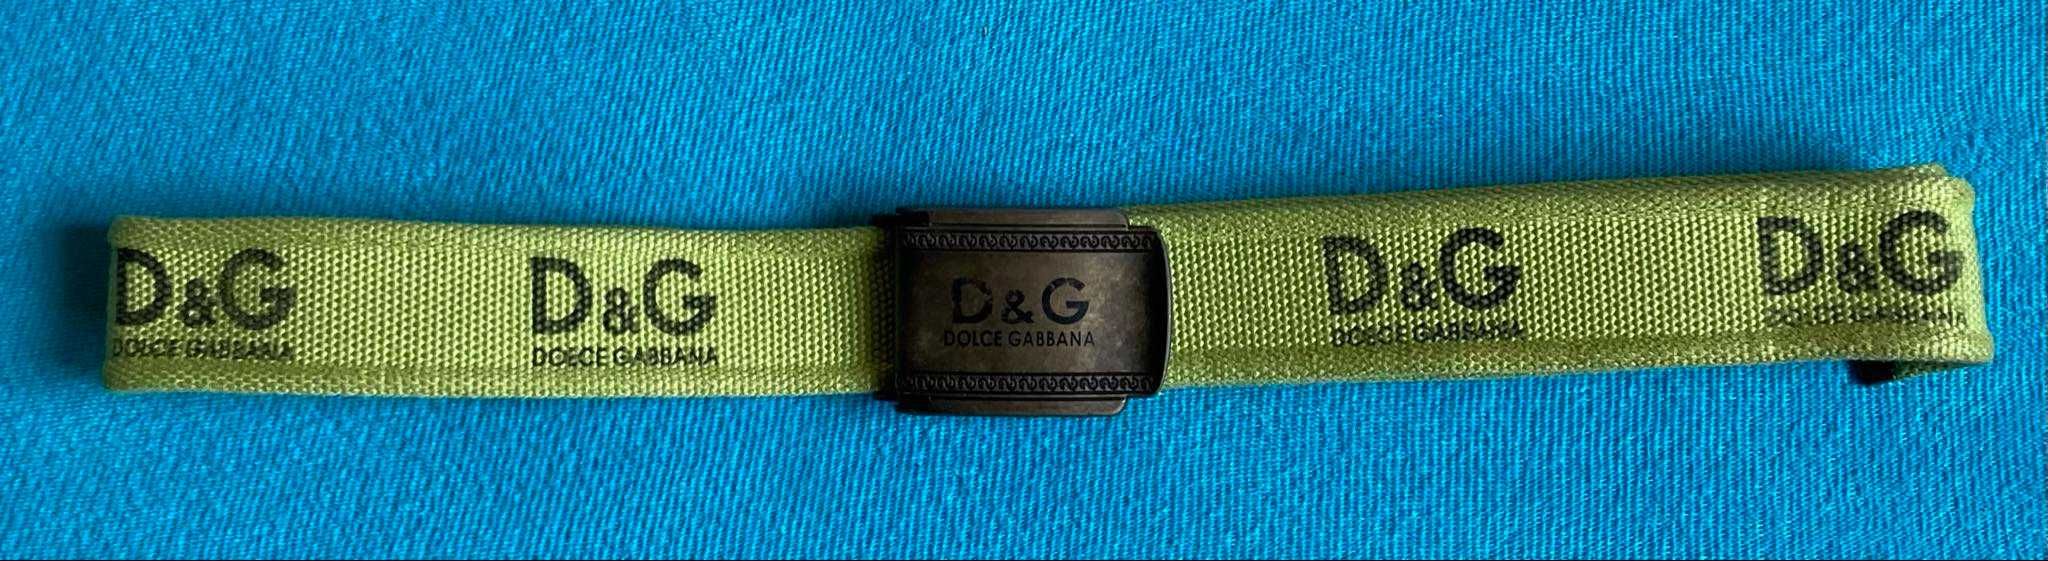 Pasek Dolce Gabbana vintage